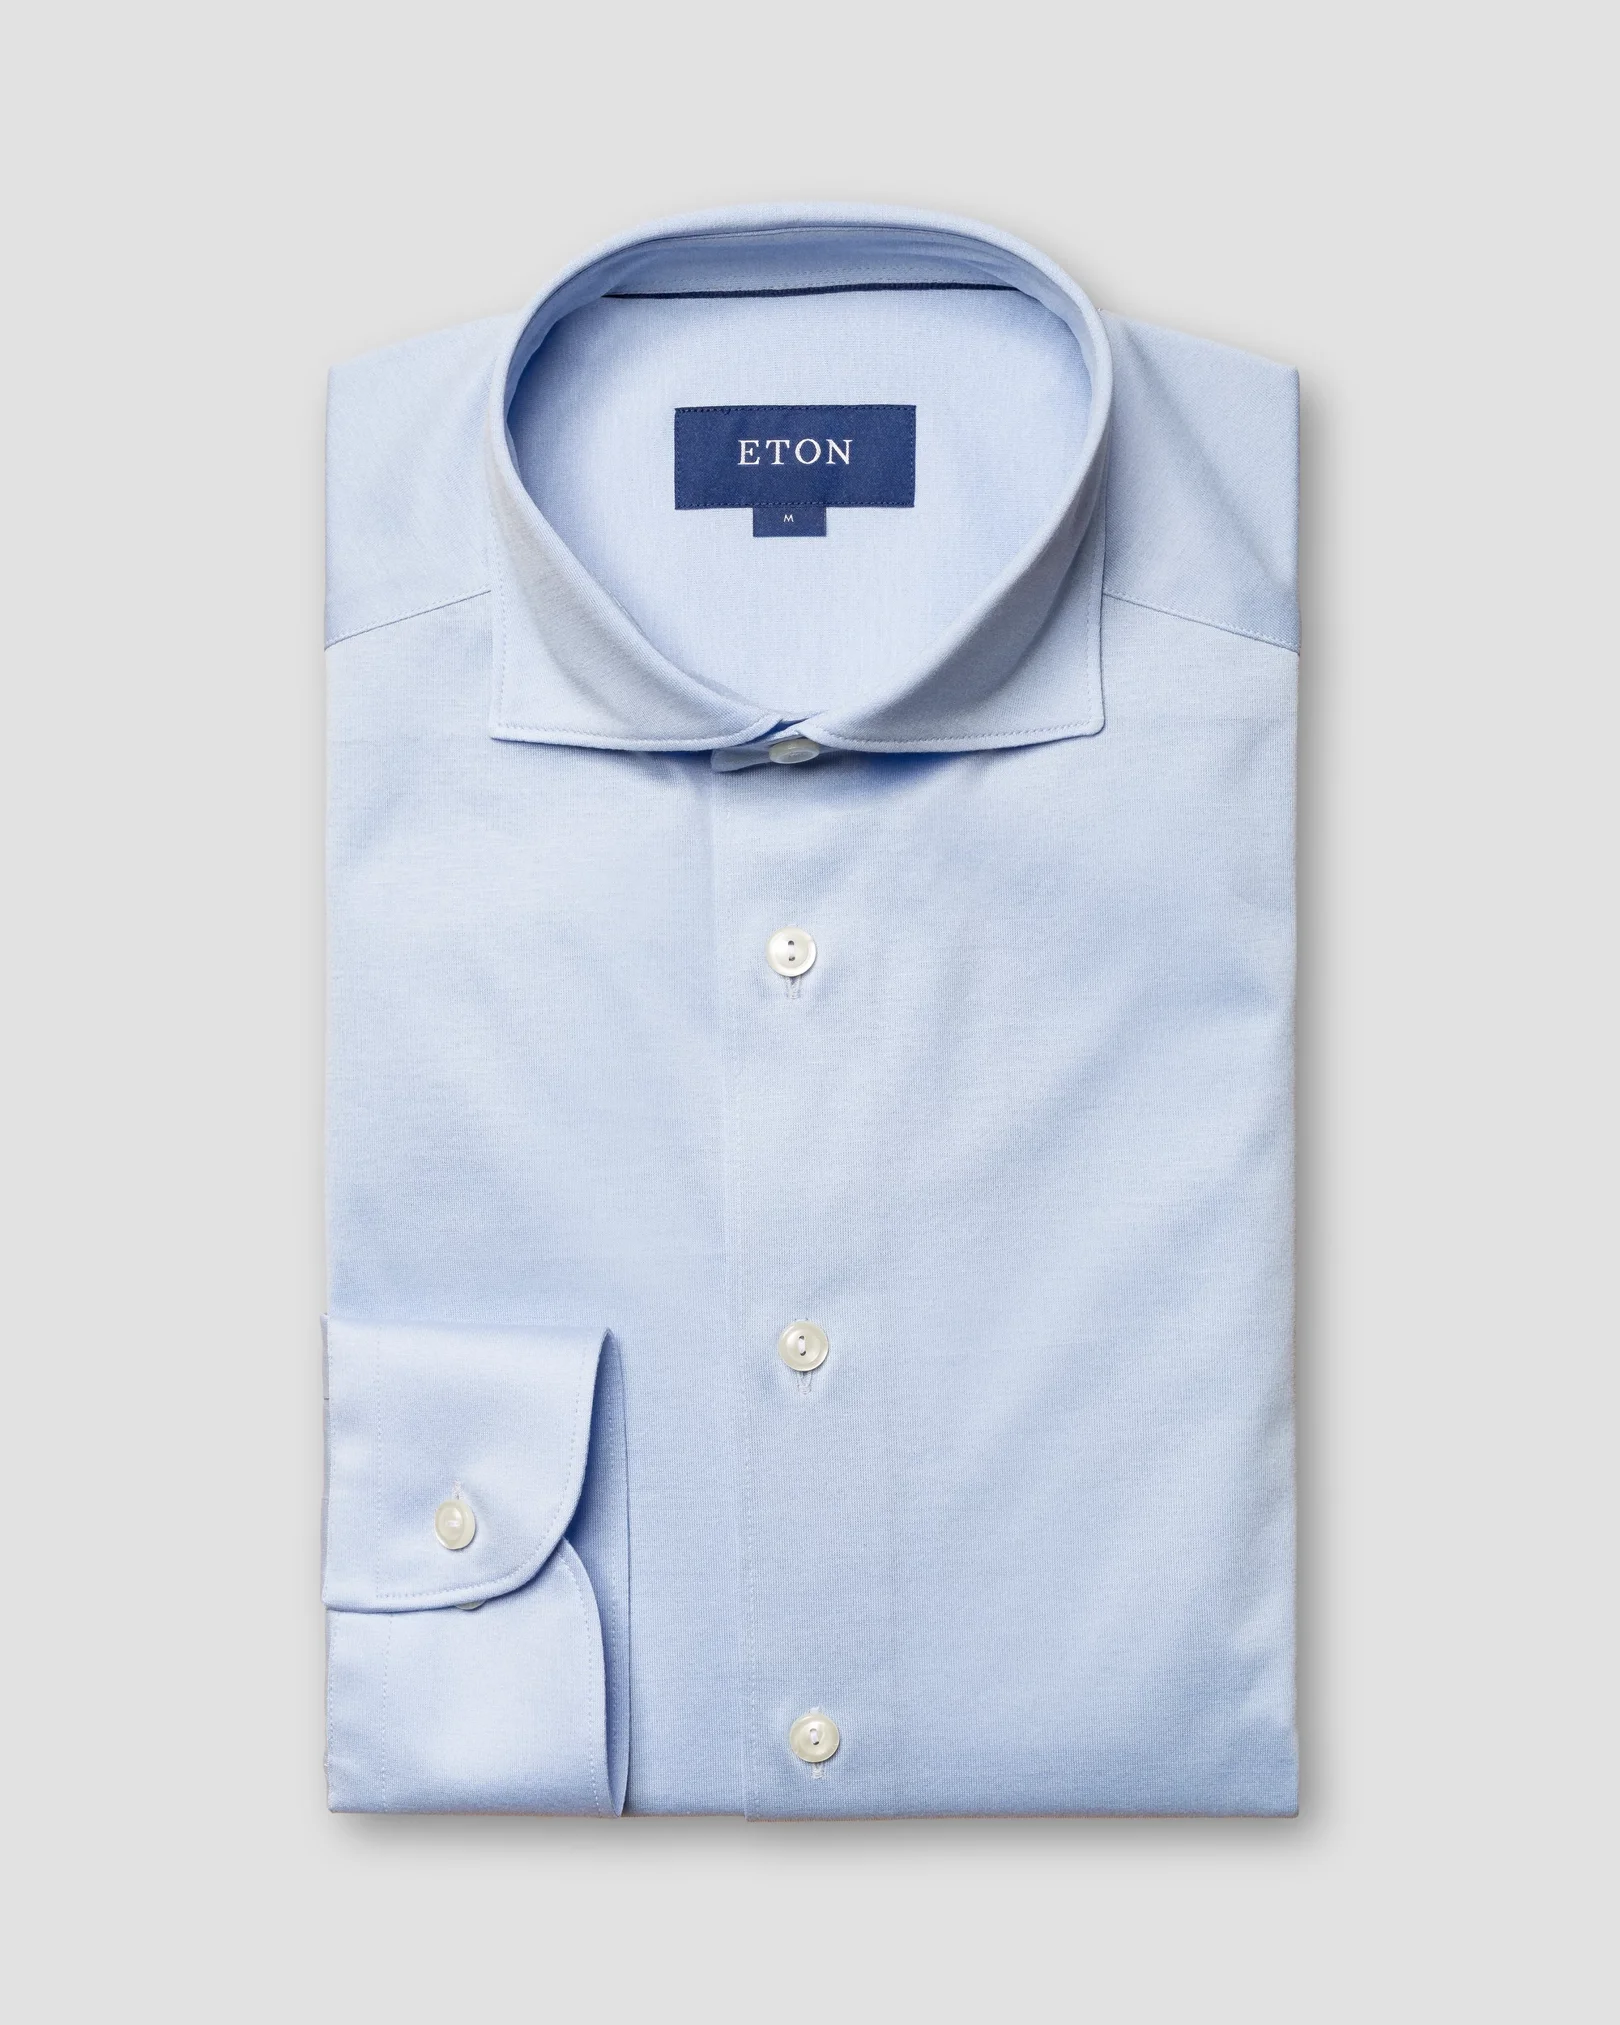 Eton - light blue jersey shirt wide spread jersey single rounded slim